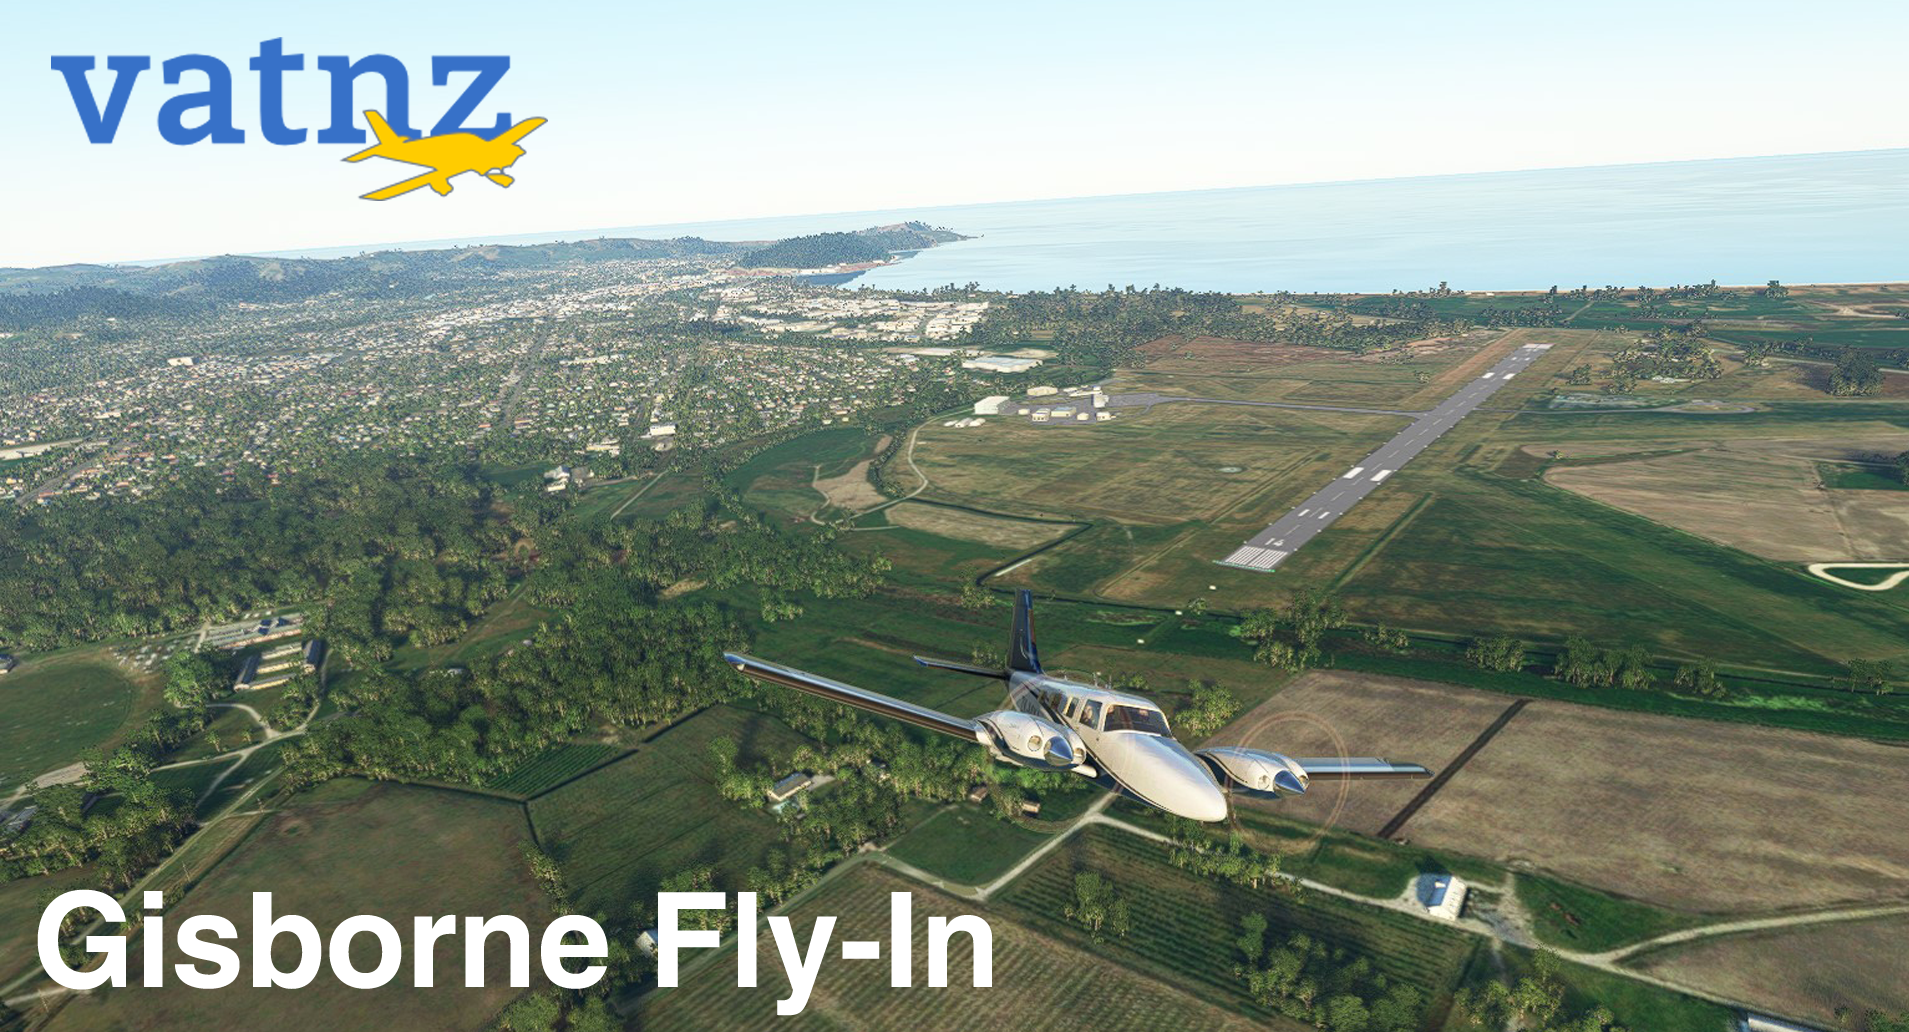 Gisborne Fly-in